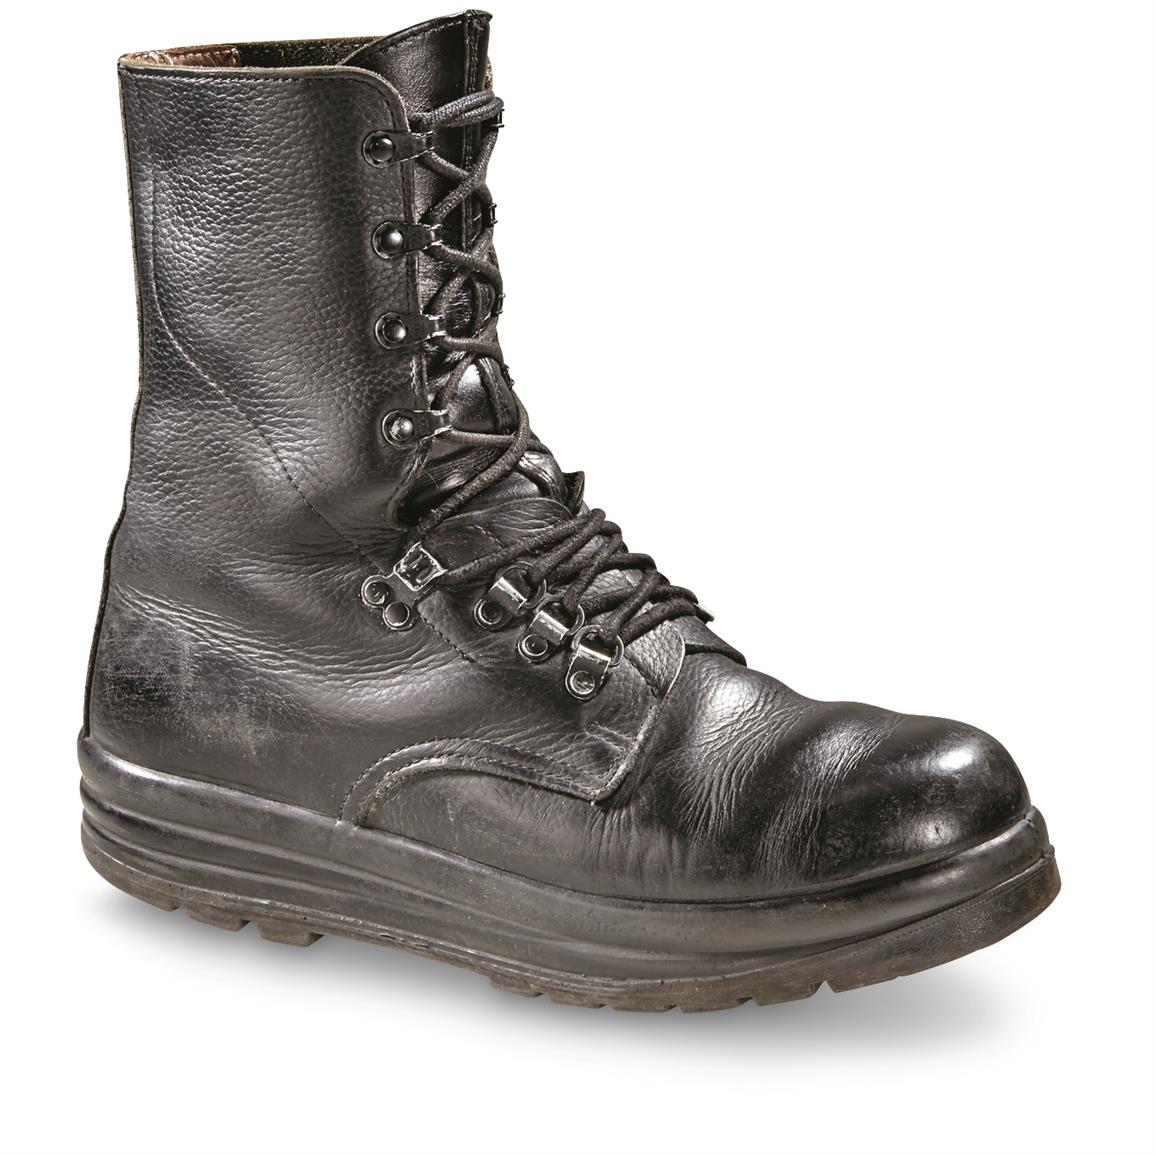 Swiss Military Surplus Waterproof Leather Combat Boots